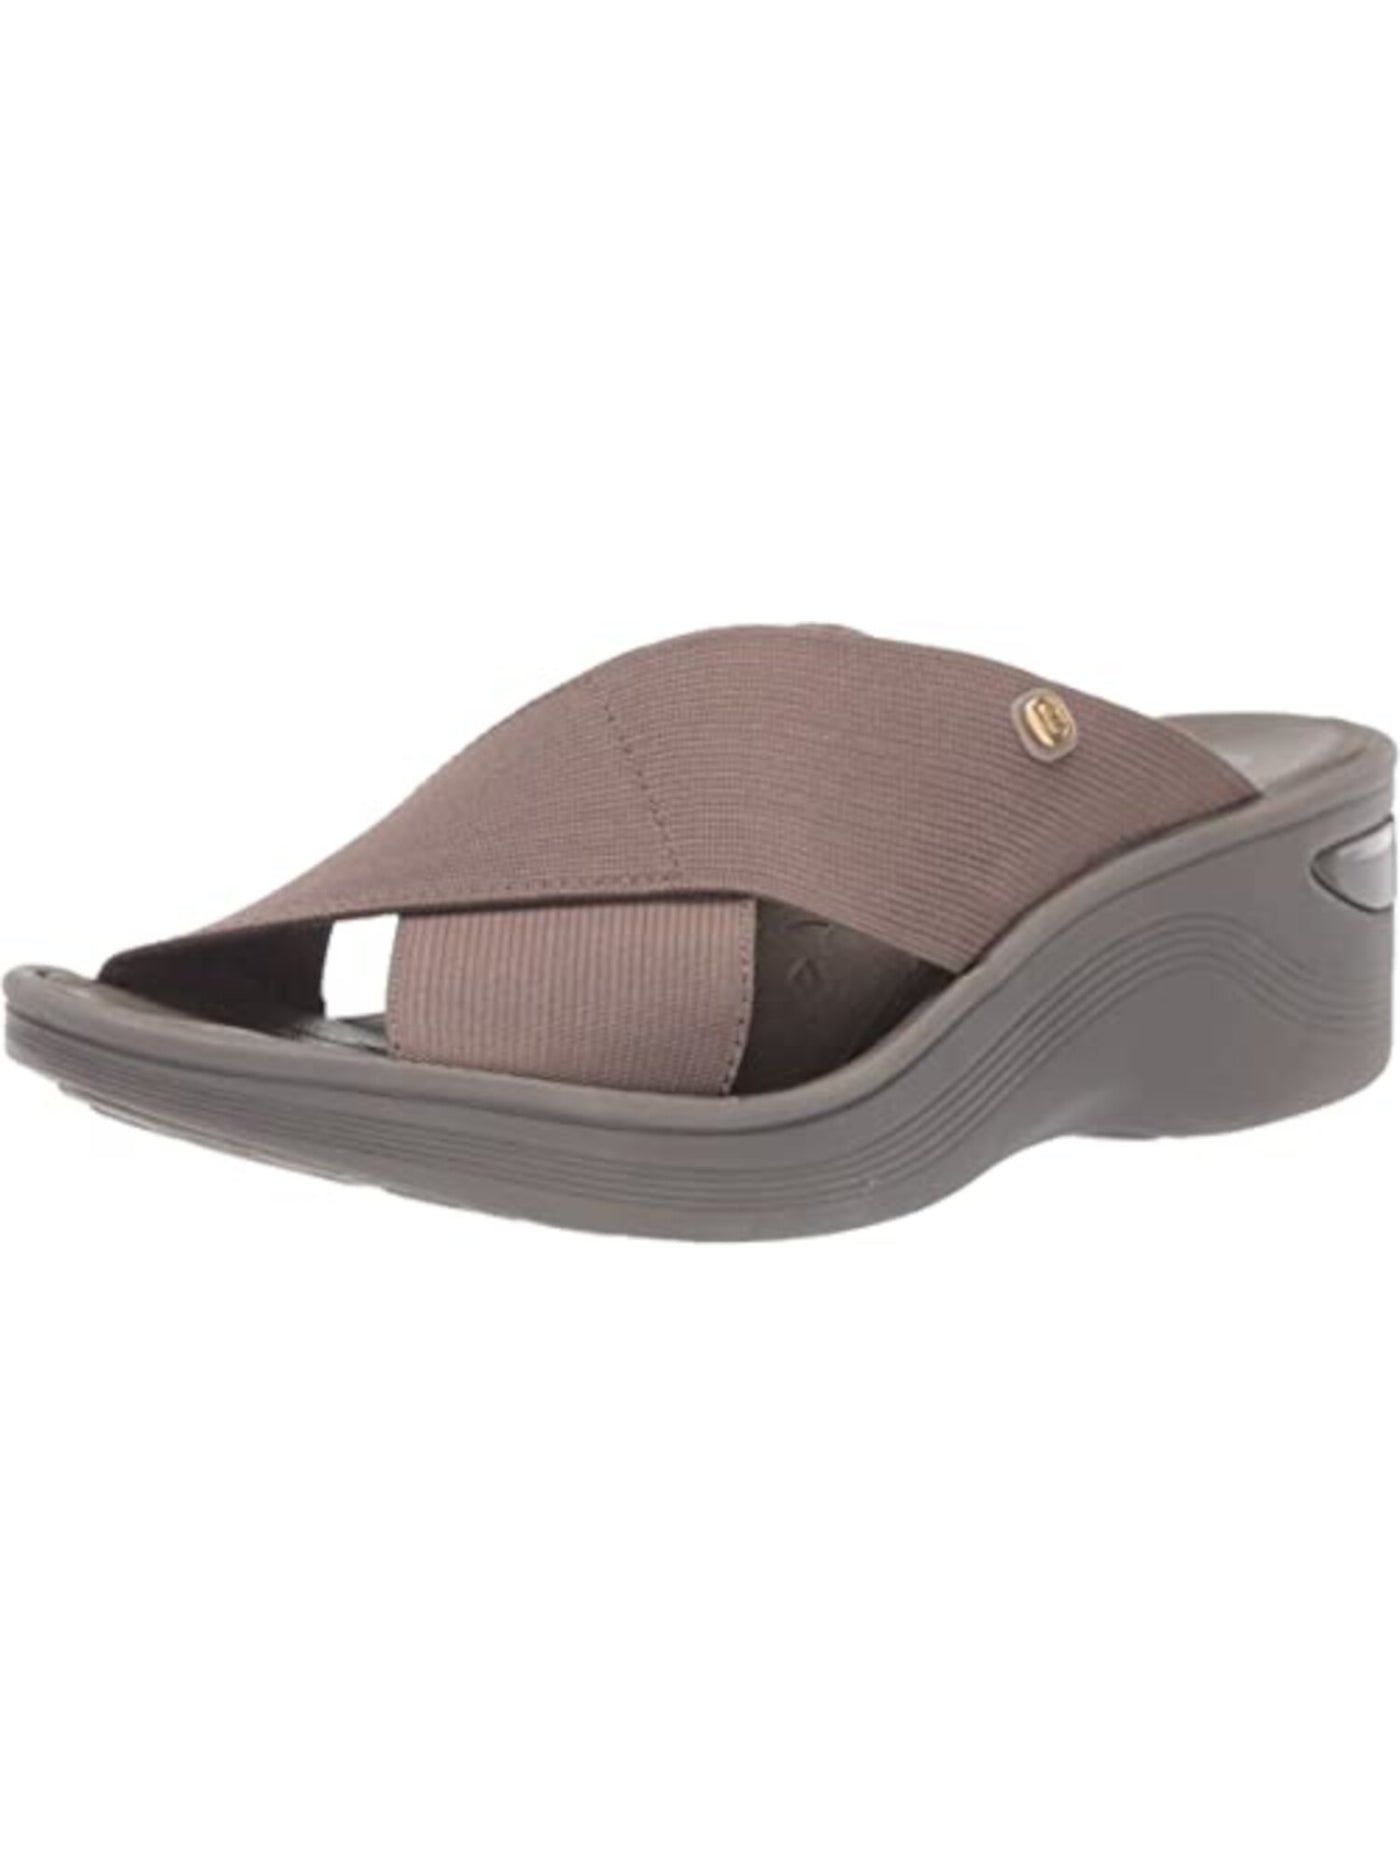 BZEES Womens Gray 1/2" Platform Stretch Comfort Cushioned Non-Slip Desire Round Toe Wedge Slip On Slide Sandals Shoes 9 M